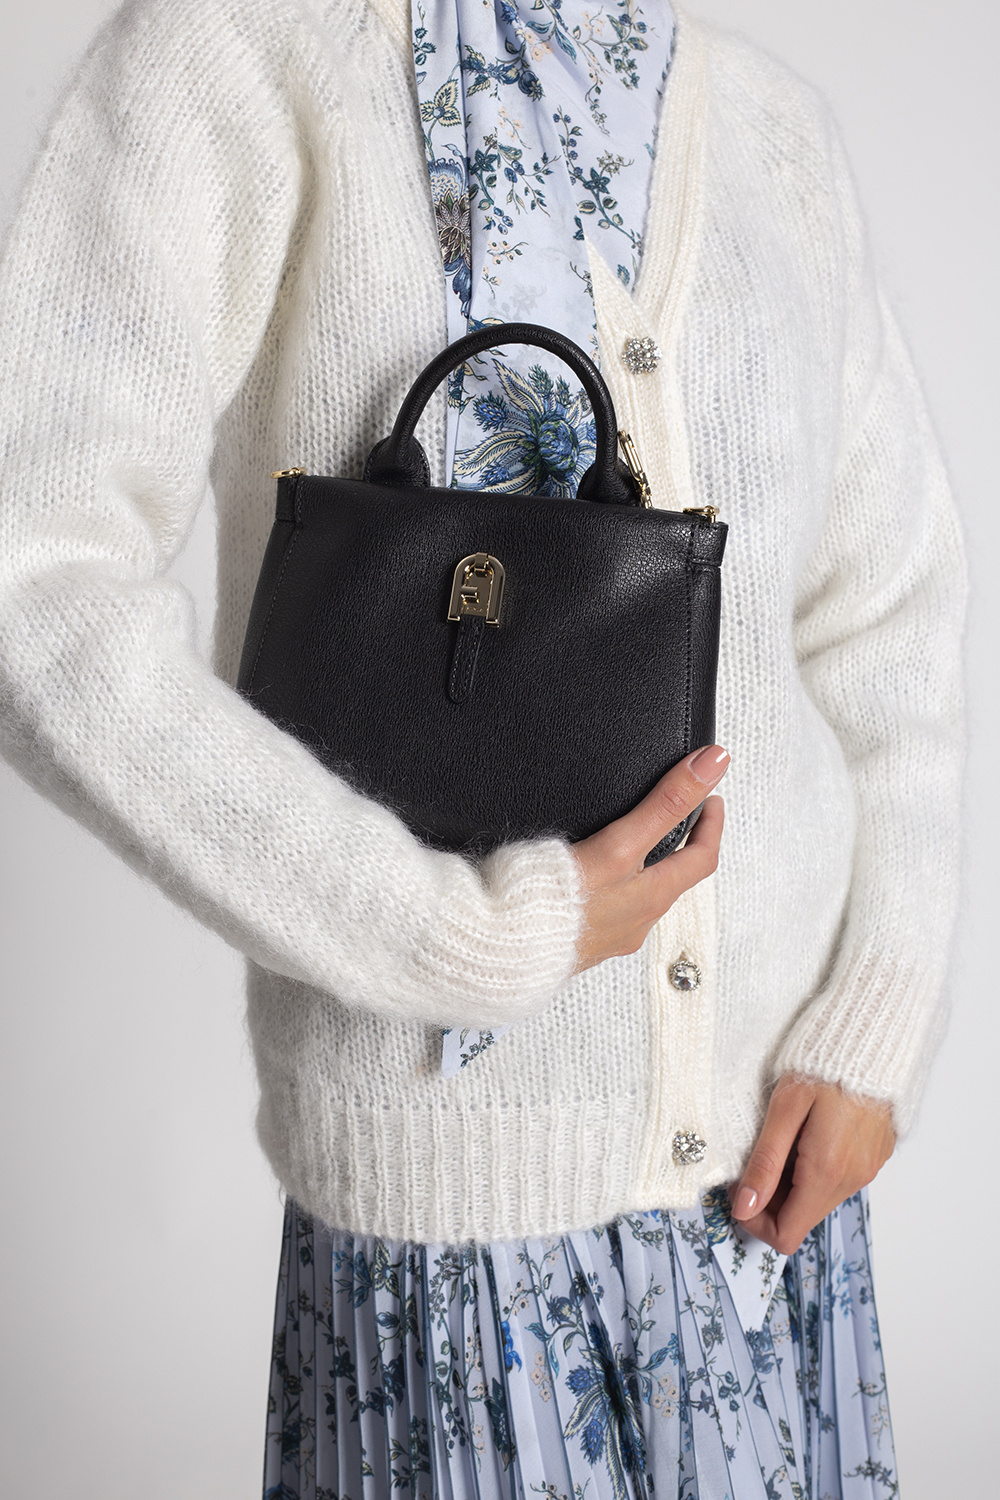 Louis Vuitton Epi Leather Aqua Print Alma BB Handbag